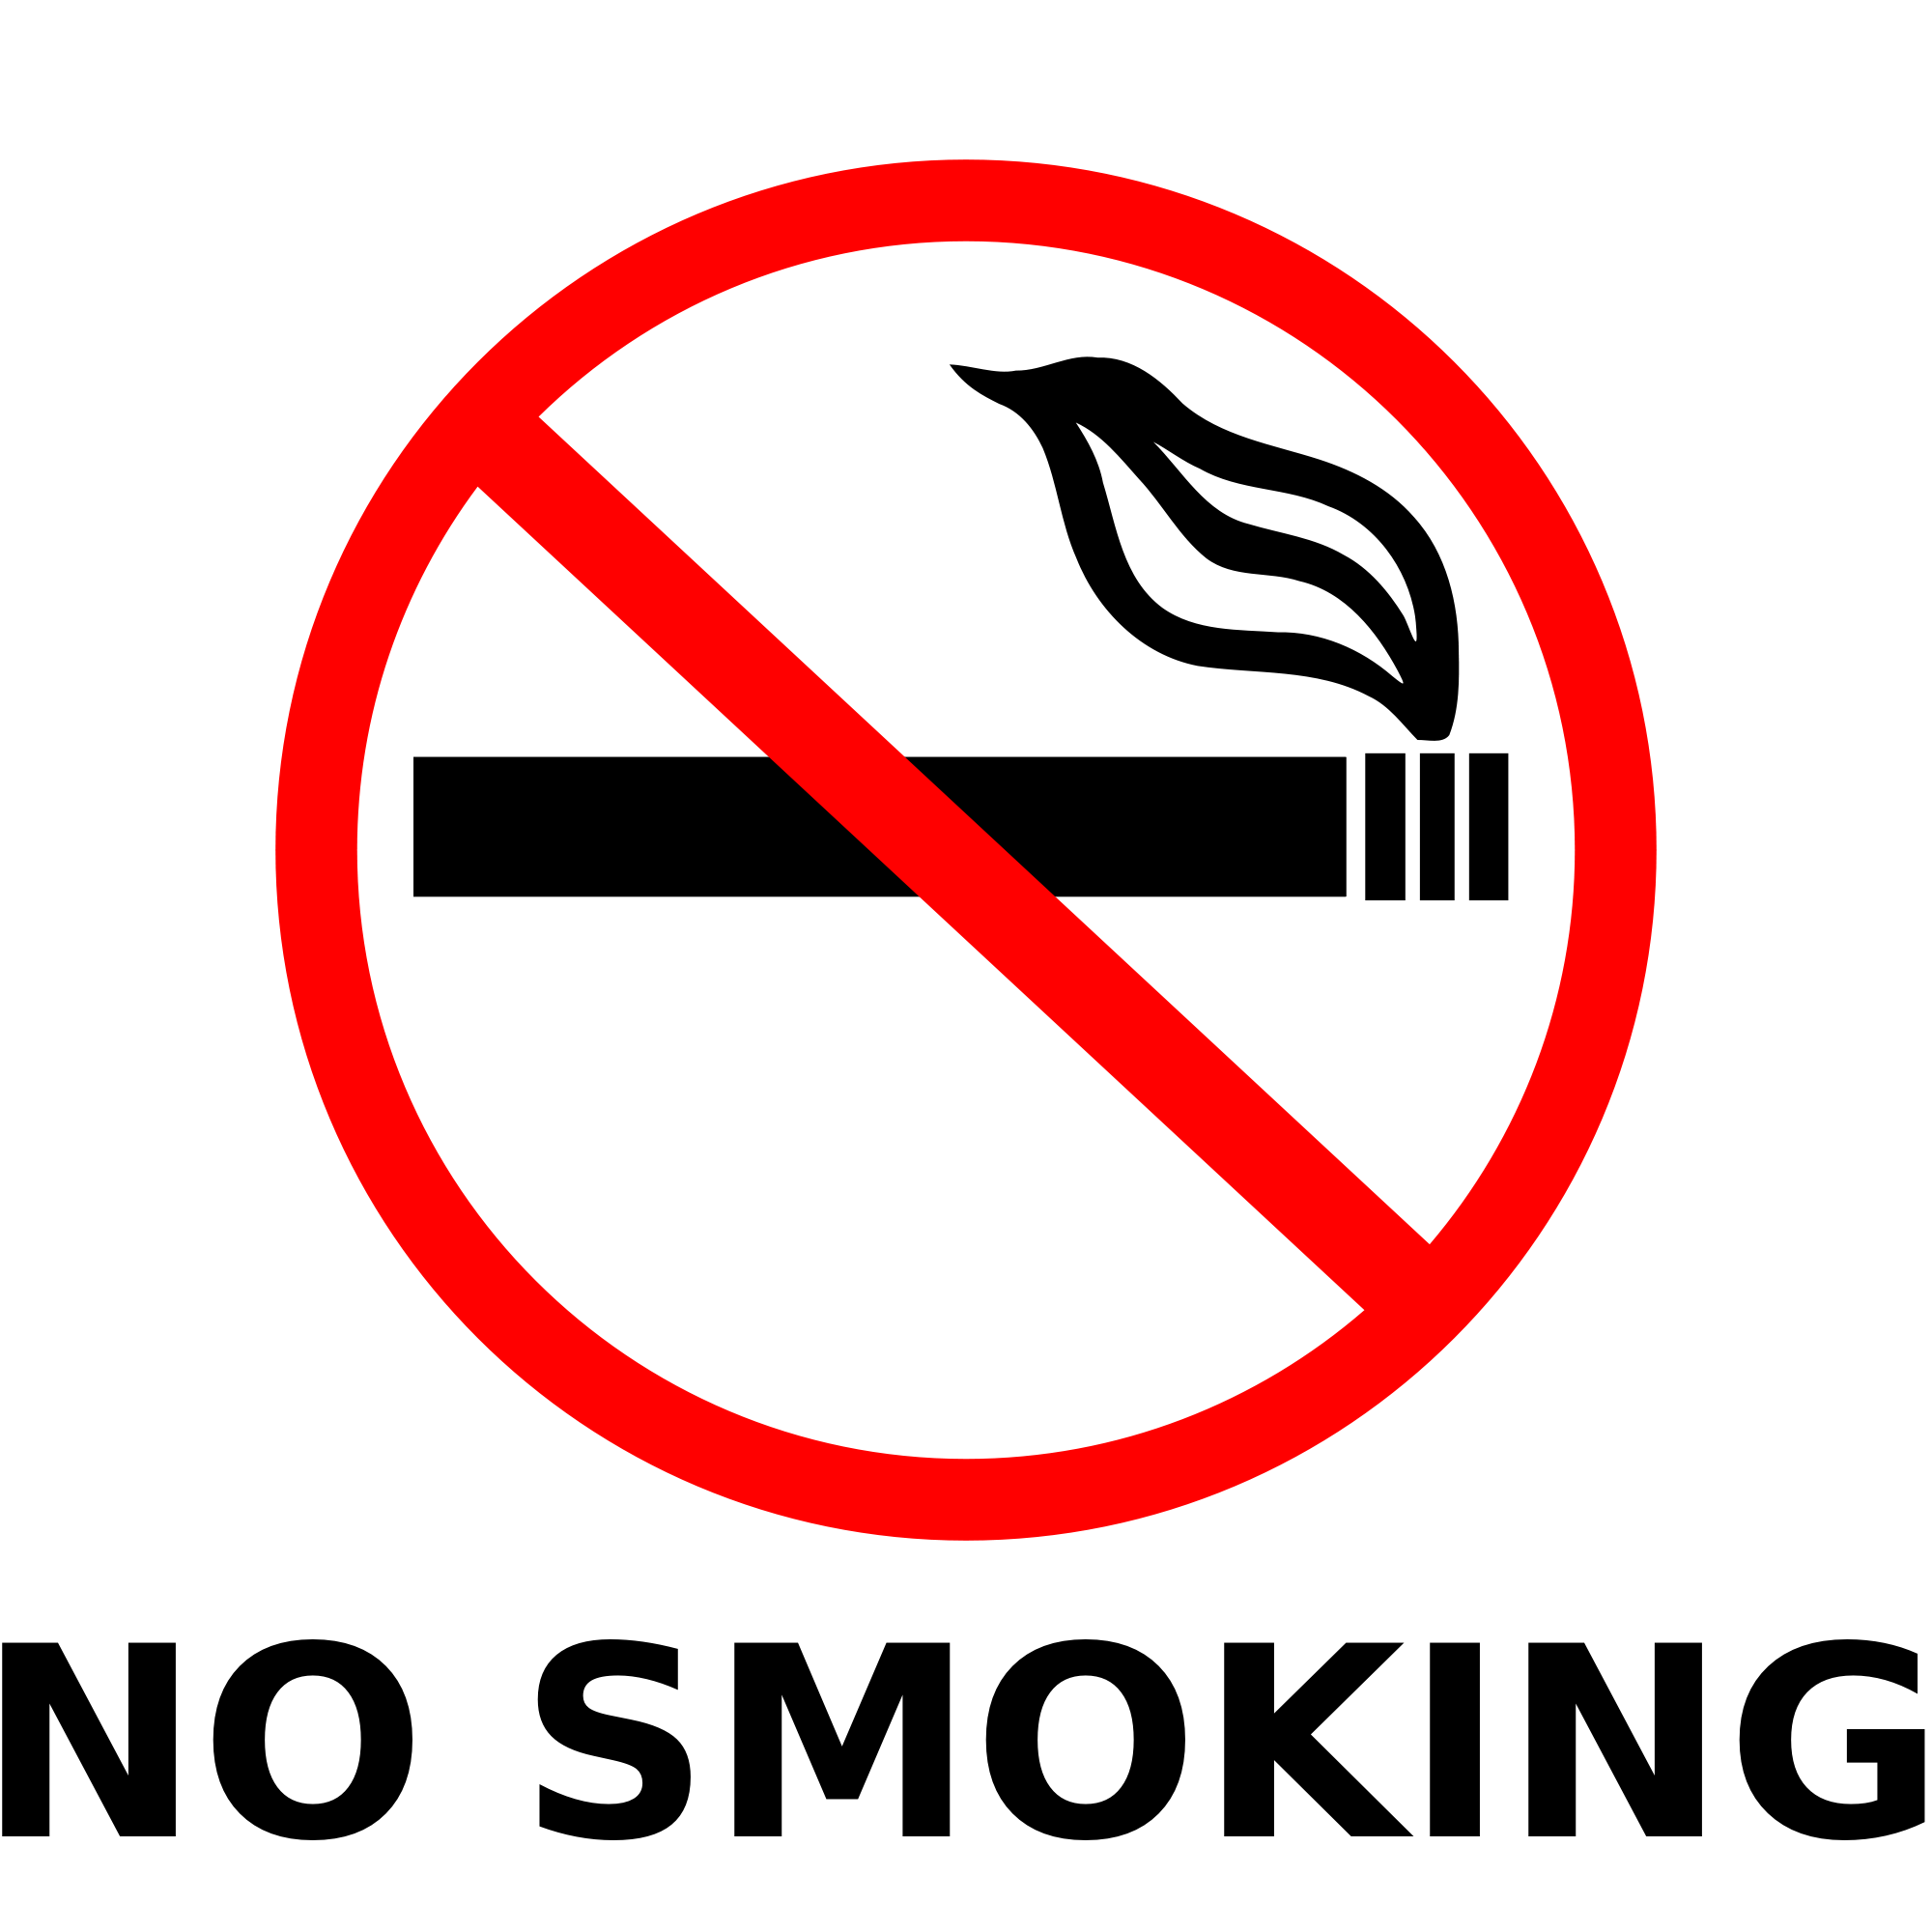 File:No smoking sign.svg - Wikimedia Commons